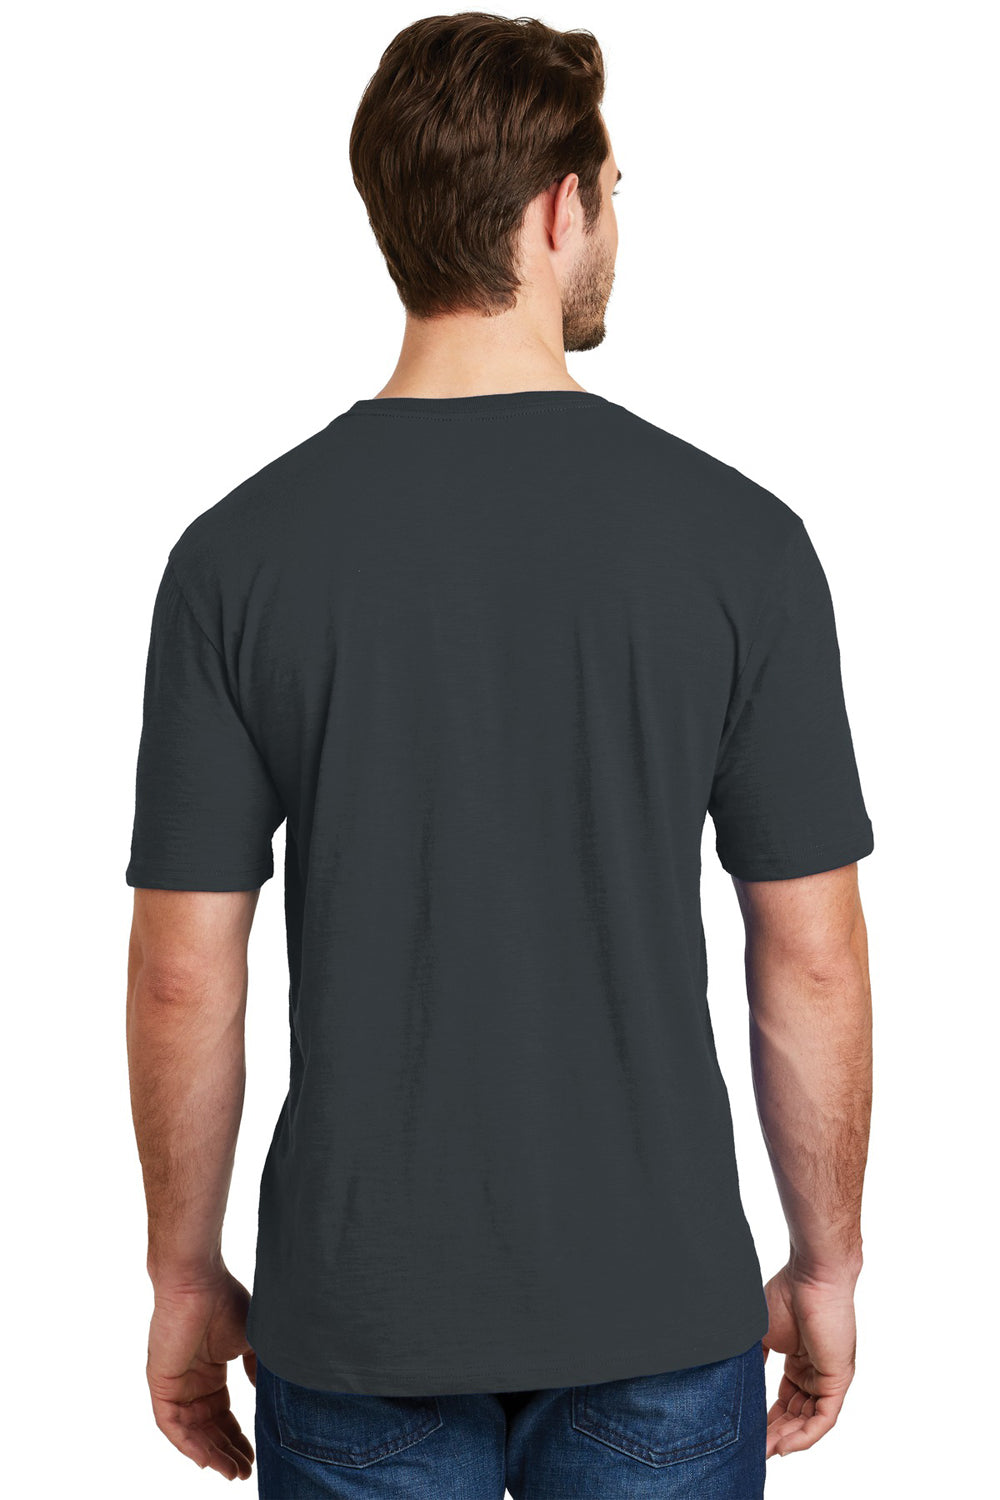 District DM108 Mens Perfect Blend Short Sleeve Crewneck T-Shirt Charcoal Grey Back